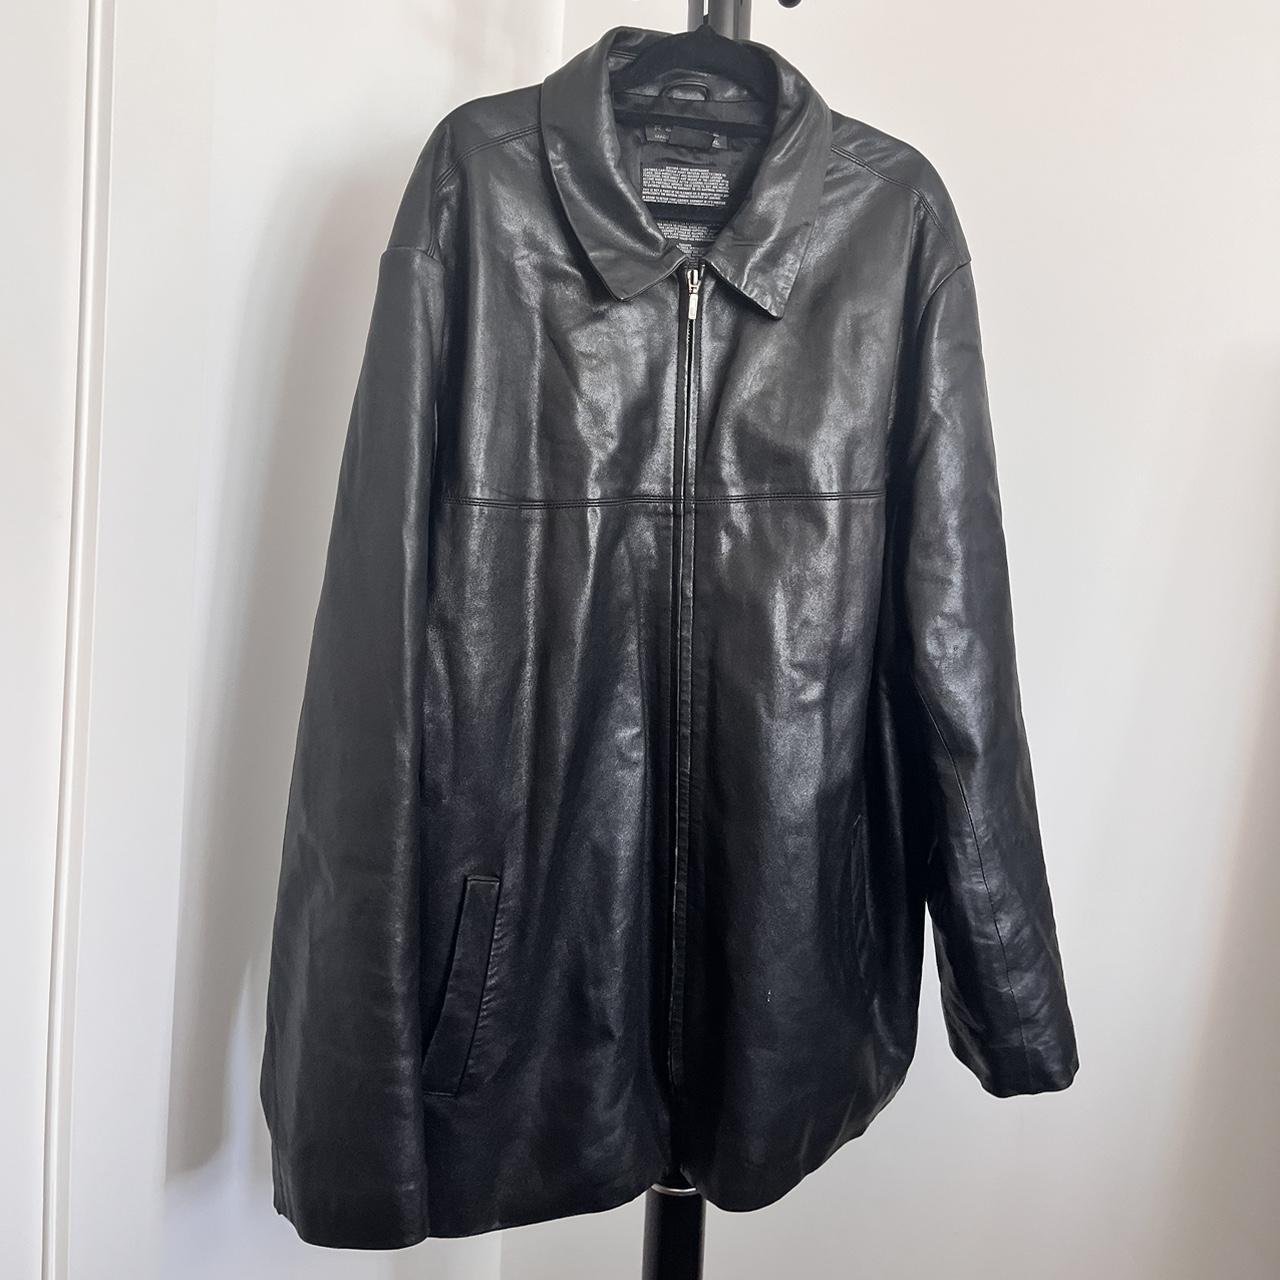 ♠️ authentic vintage leather bomber jacket ♣️no signs... - Depop